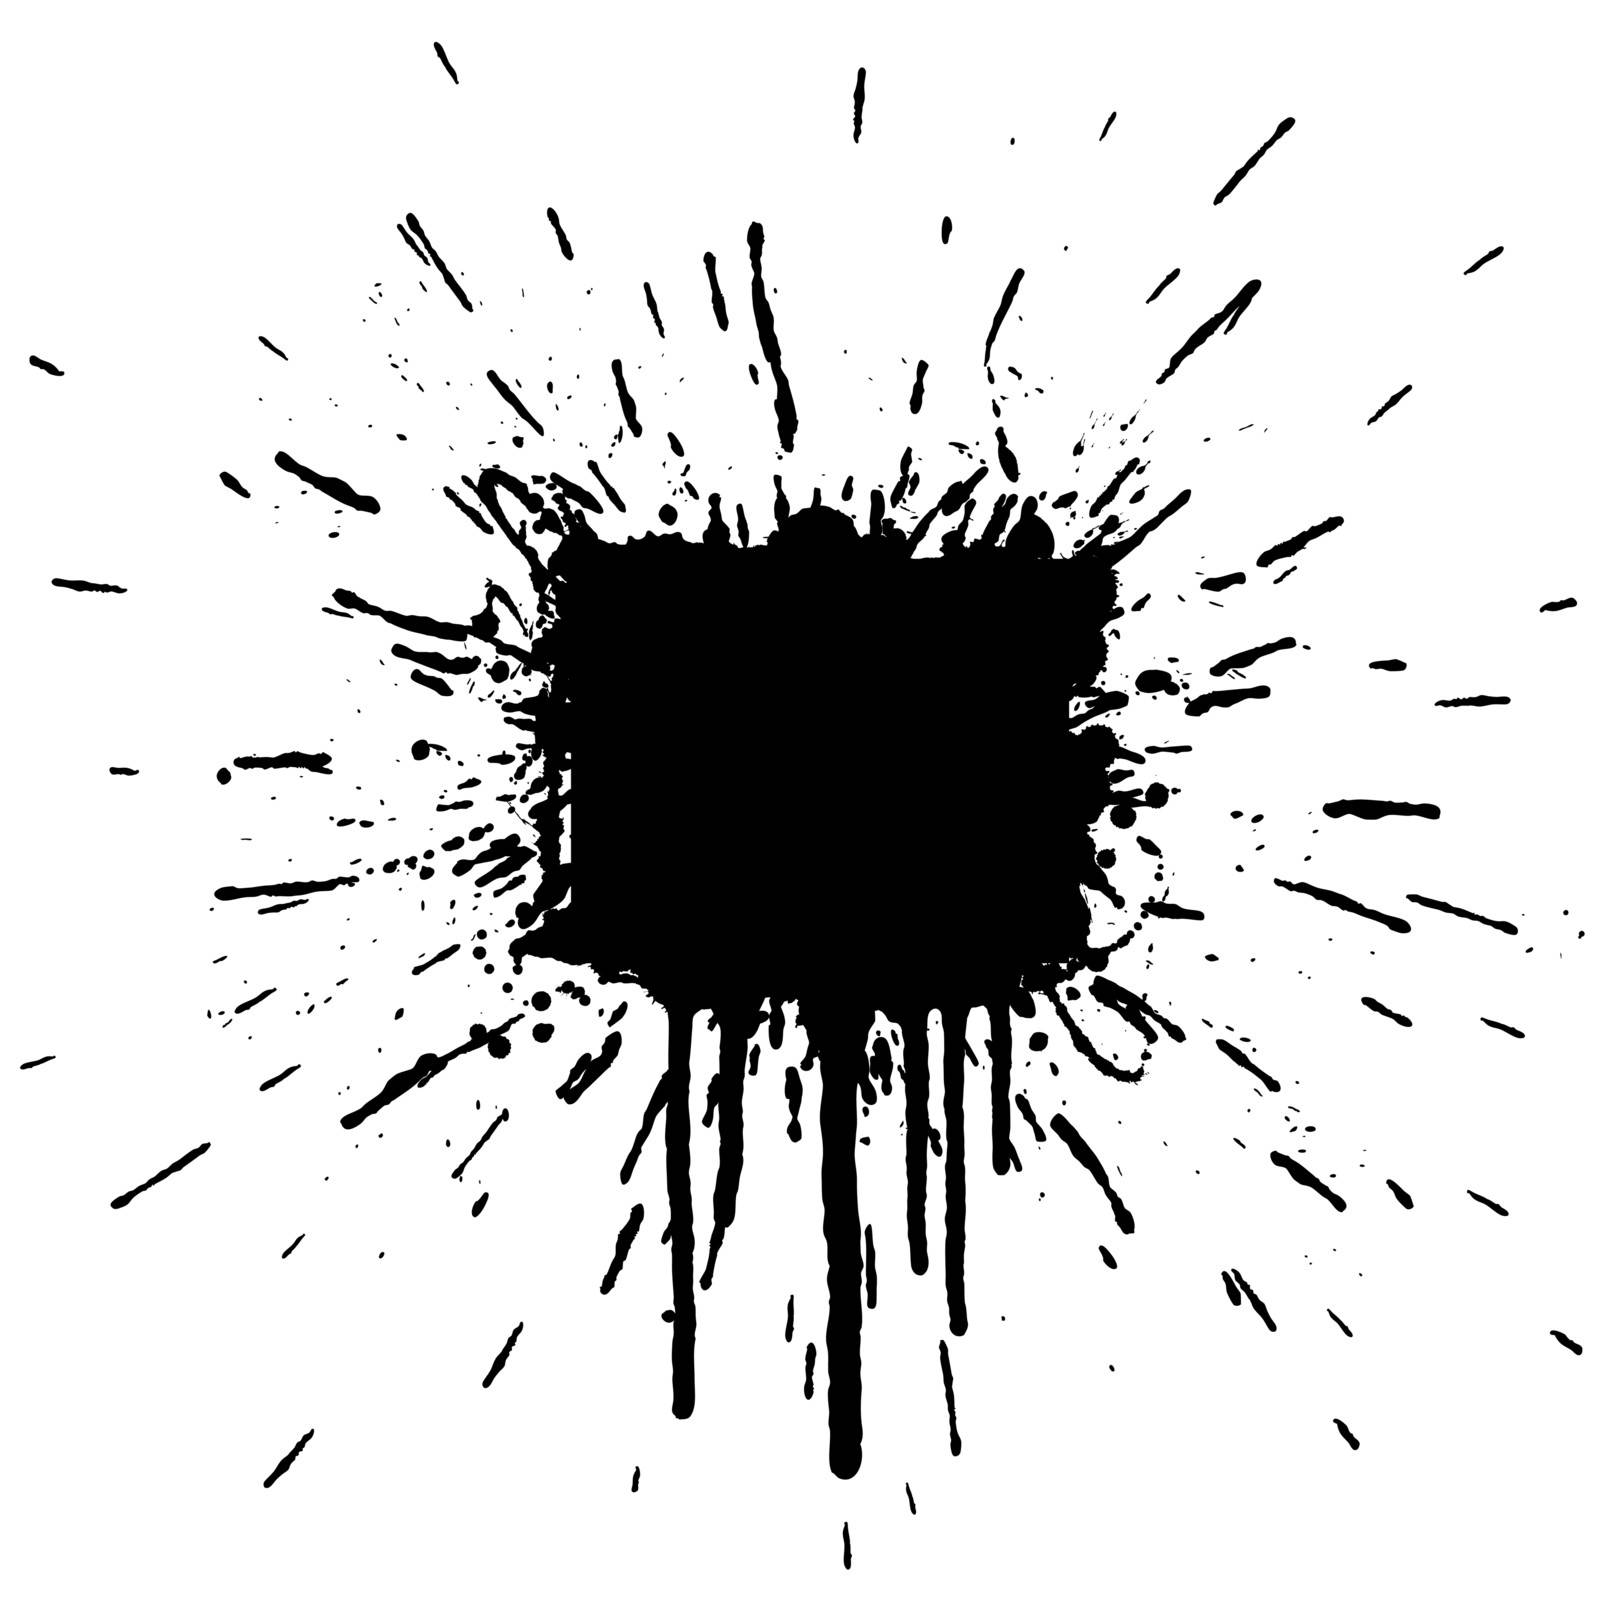 Ink splatter explosion design element by domencolja